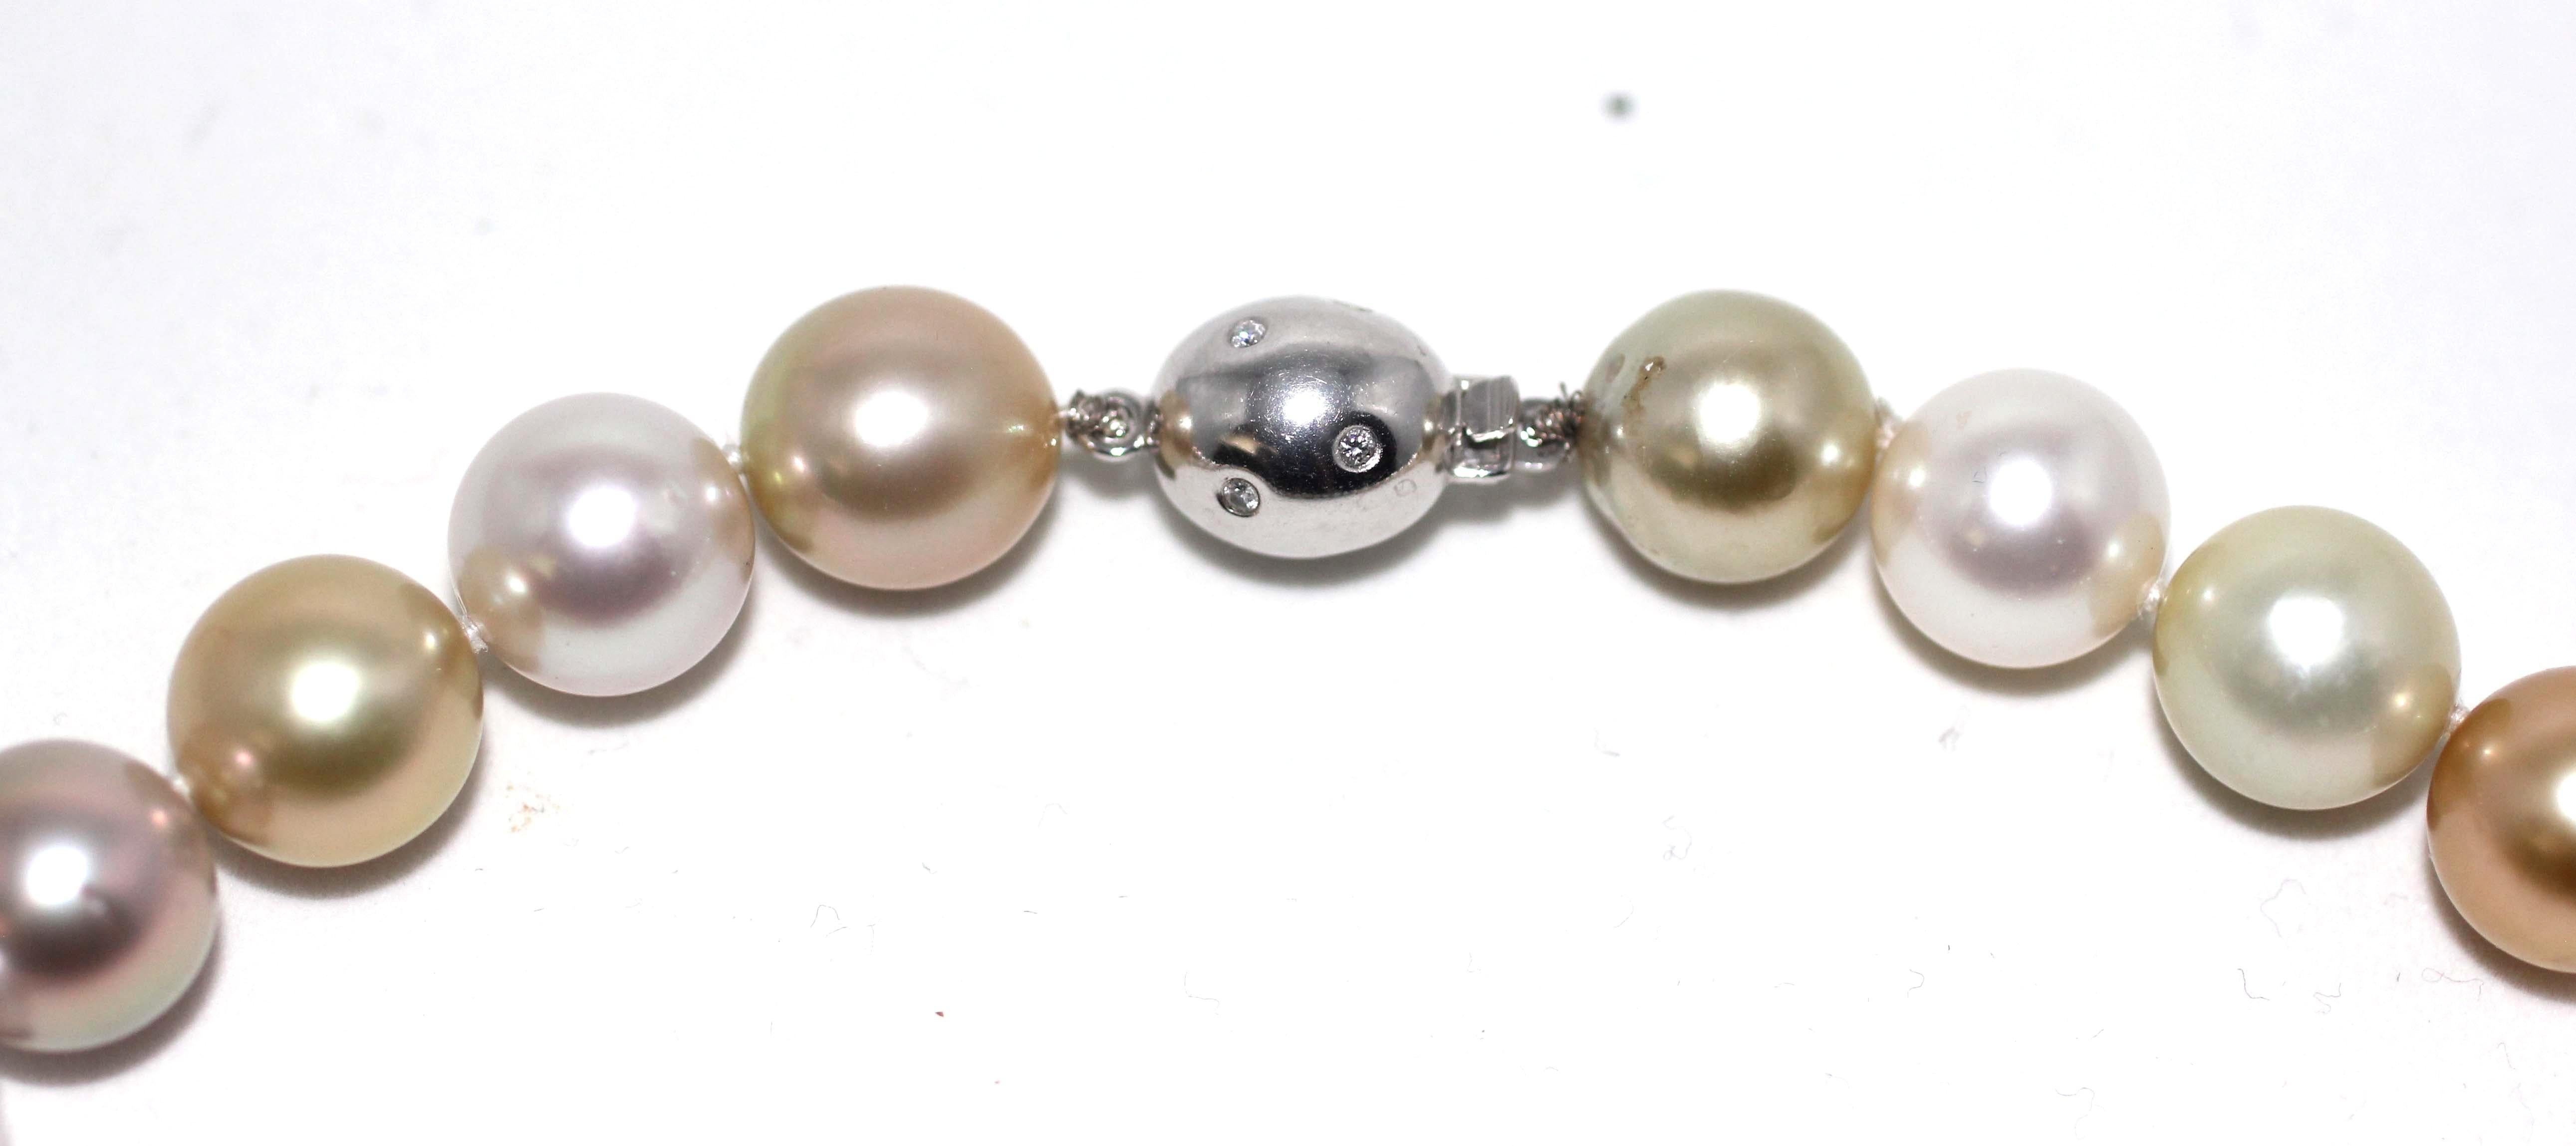 damaged pearls